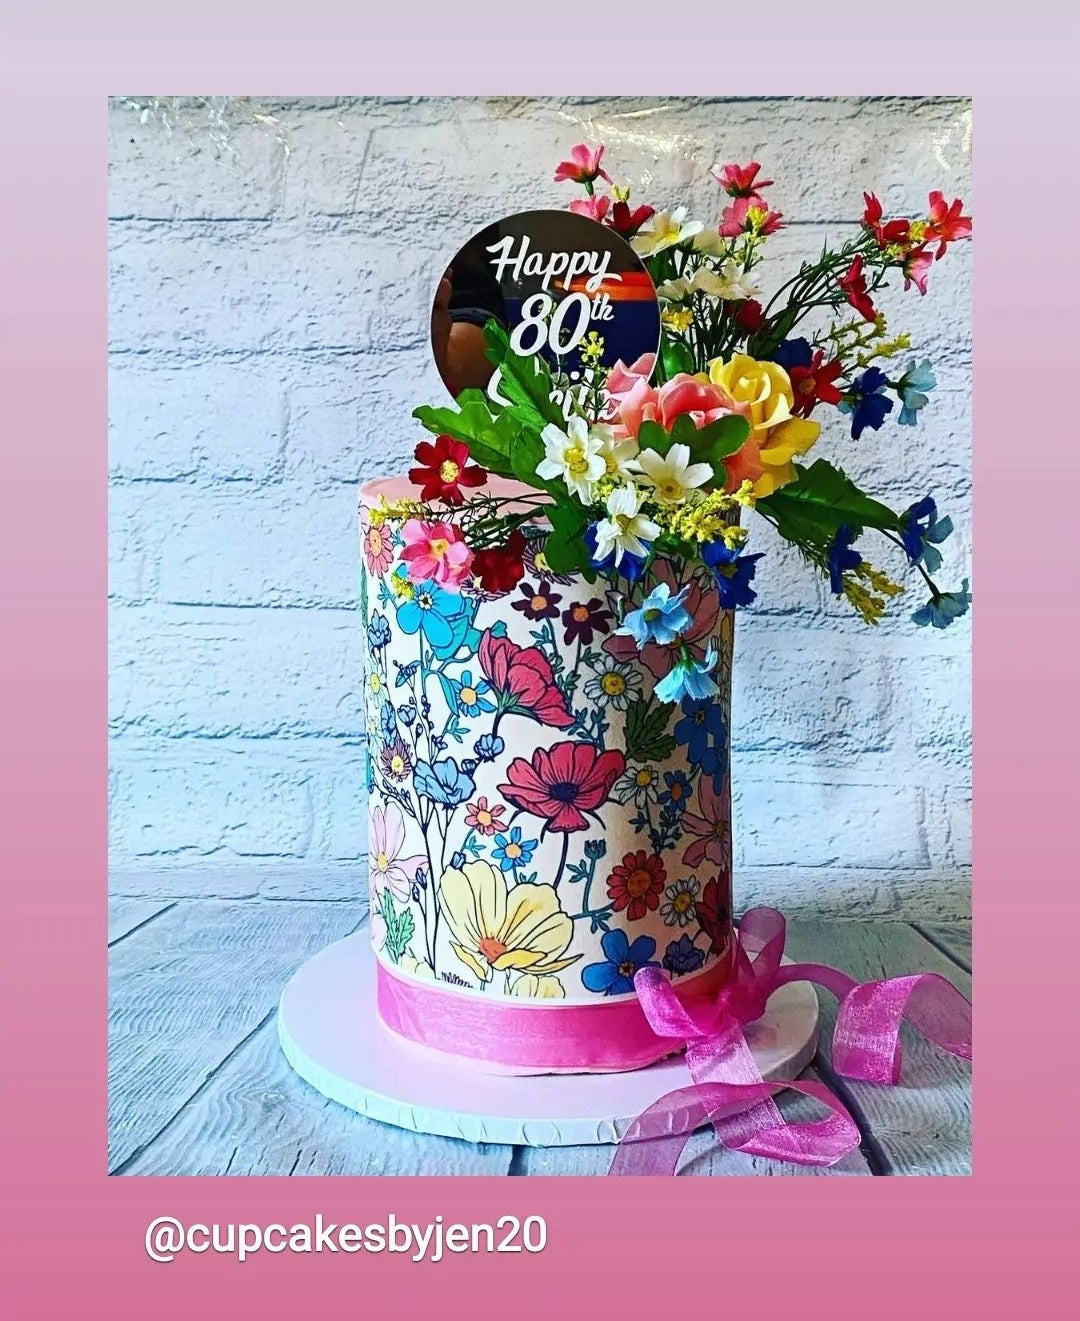 Floral Icing Sheet, Floral Cake Wrap, Icing Sheets, Cake Wrap, Edible Cake  Toppers, Edible Prints, Icing Sheet, Edible Cake Decoration 